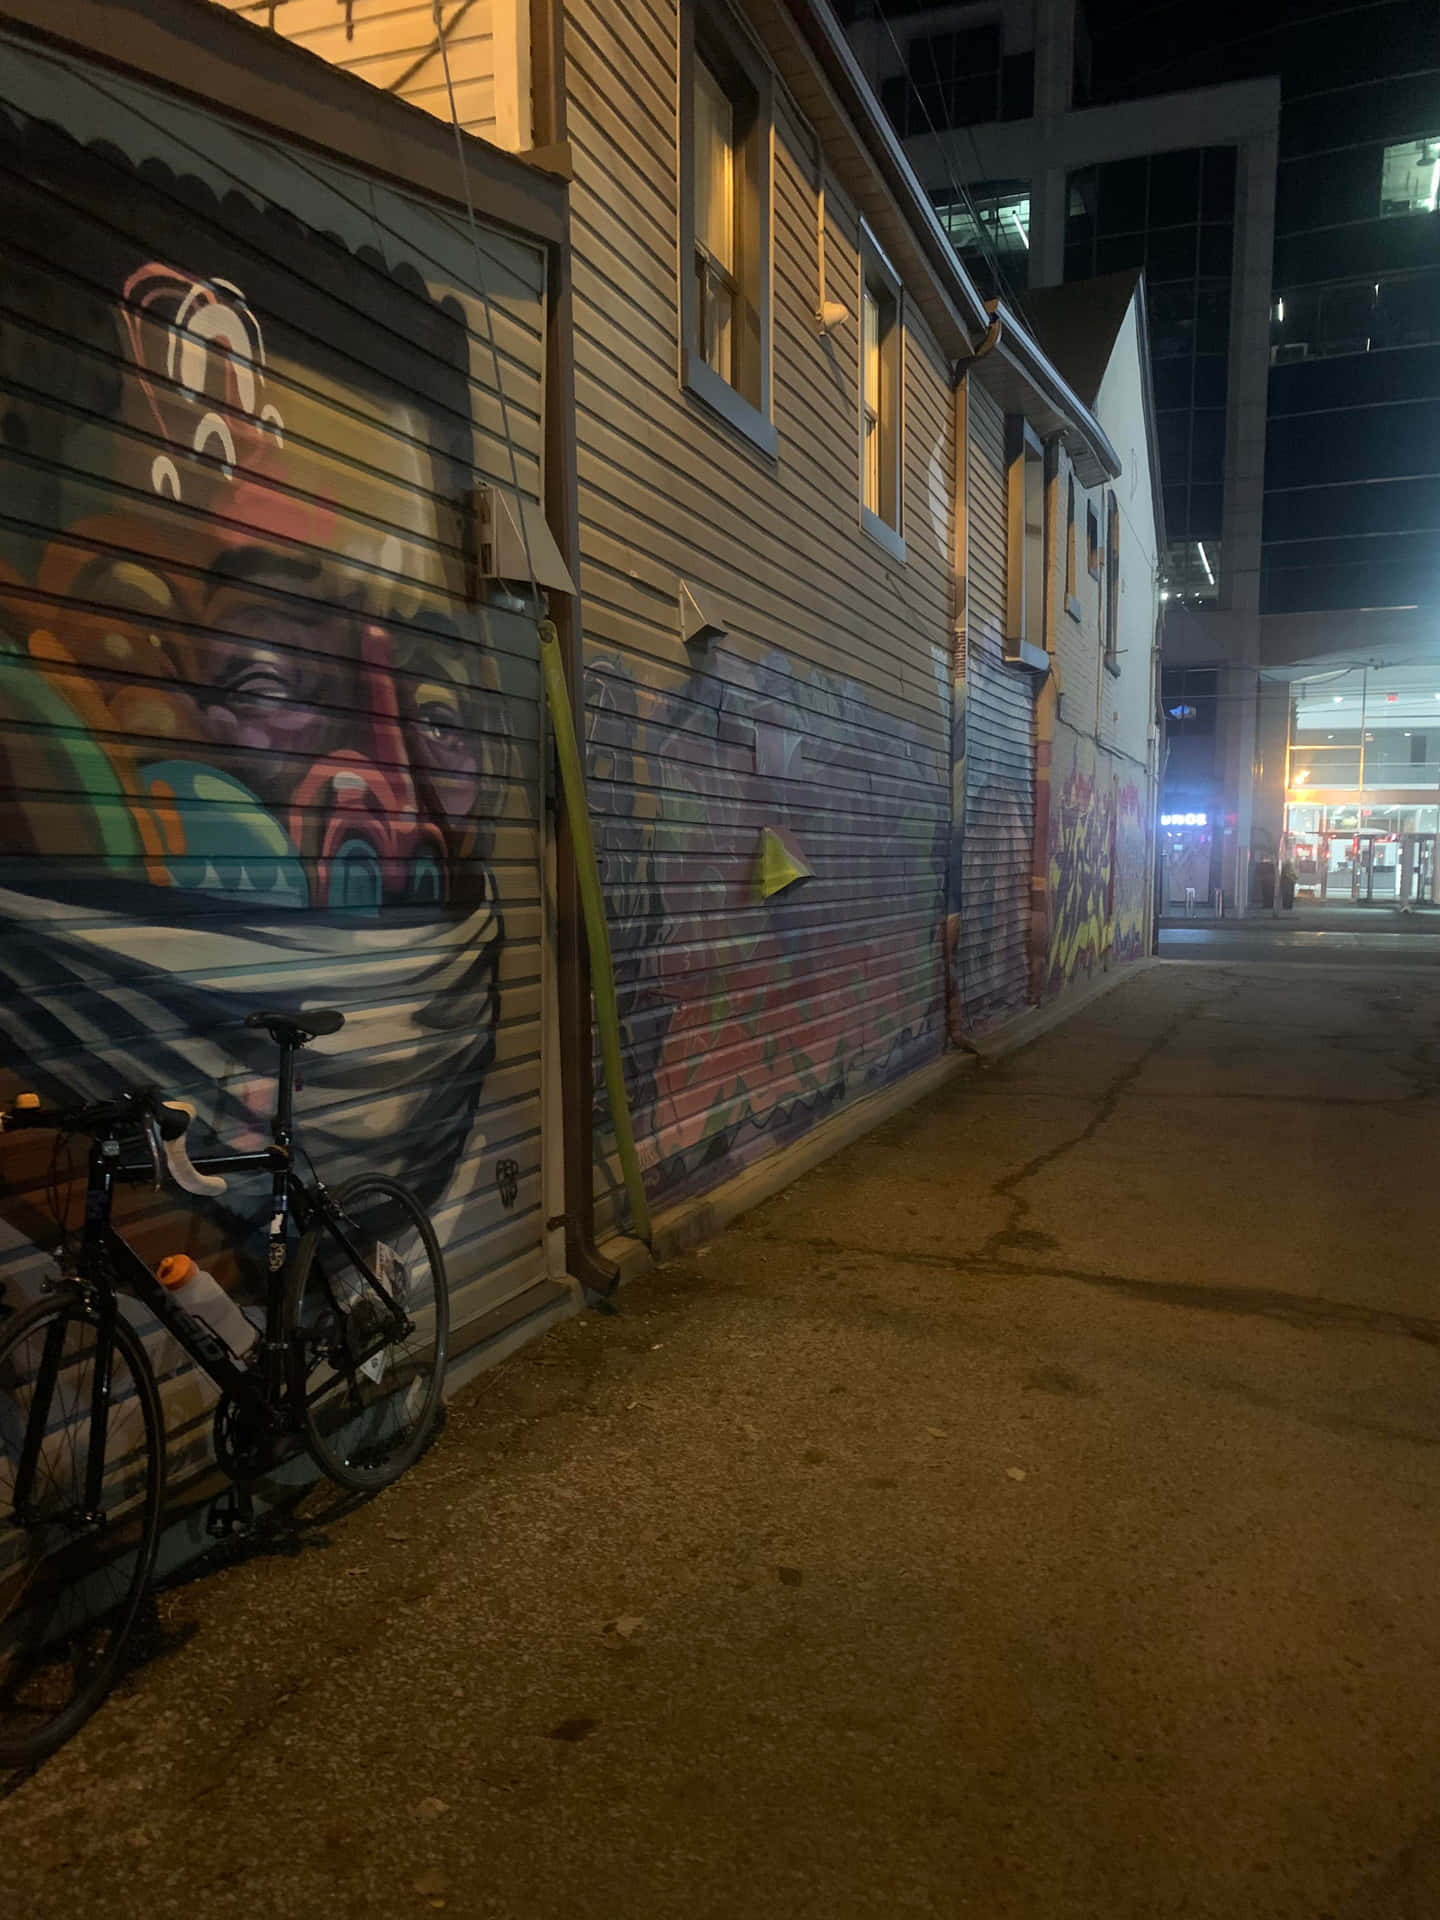 Graffitiwand Der Ghetto-haube Bei Nacht Wallpaper